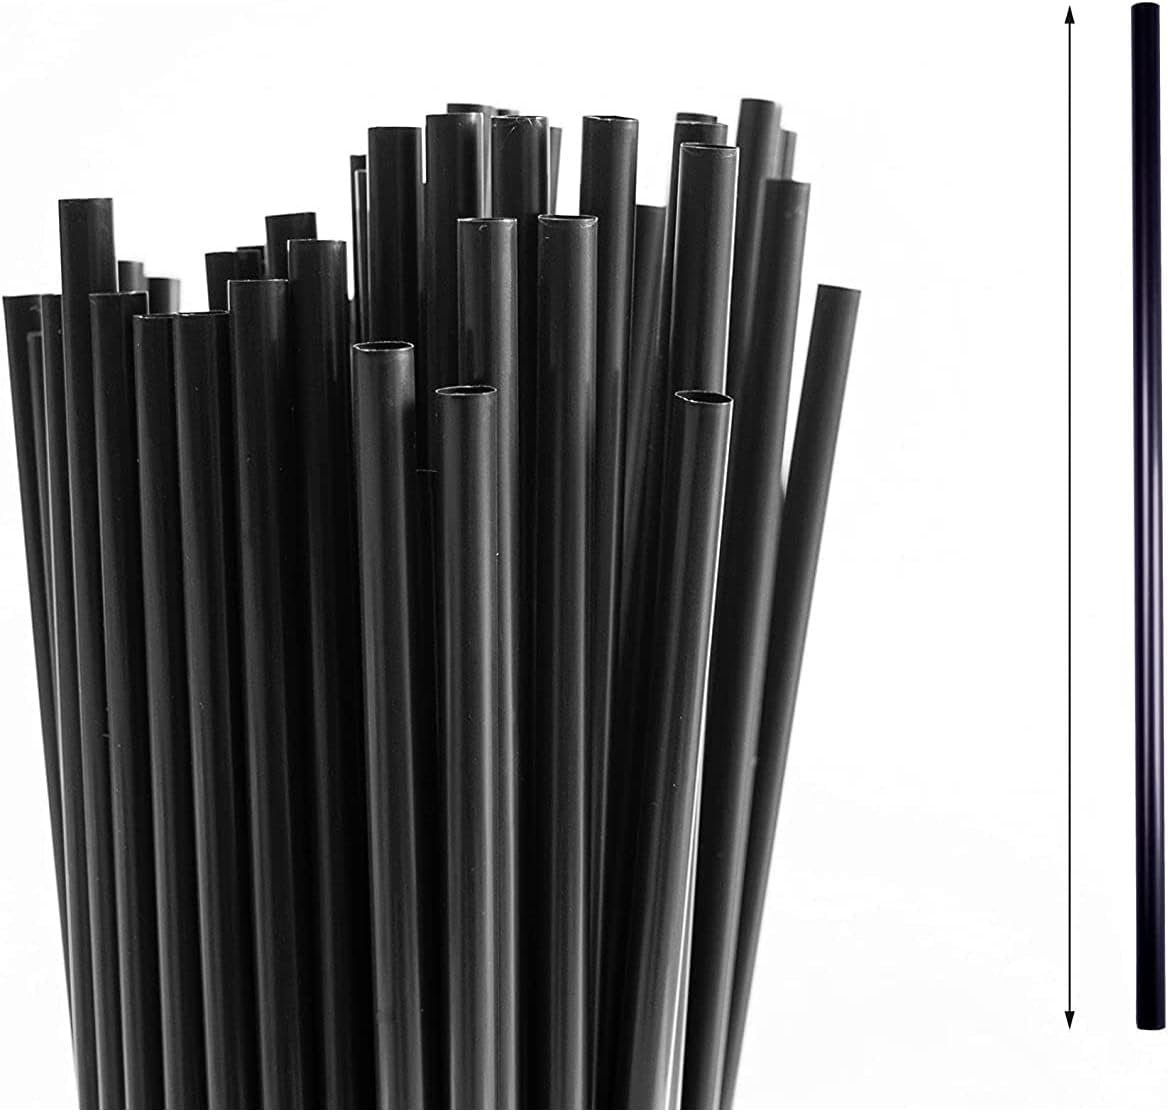 21cm Black Drinking Plastic Straws (Pack of 250)